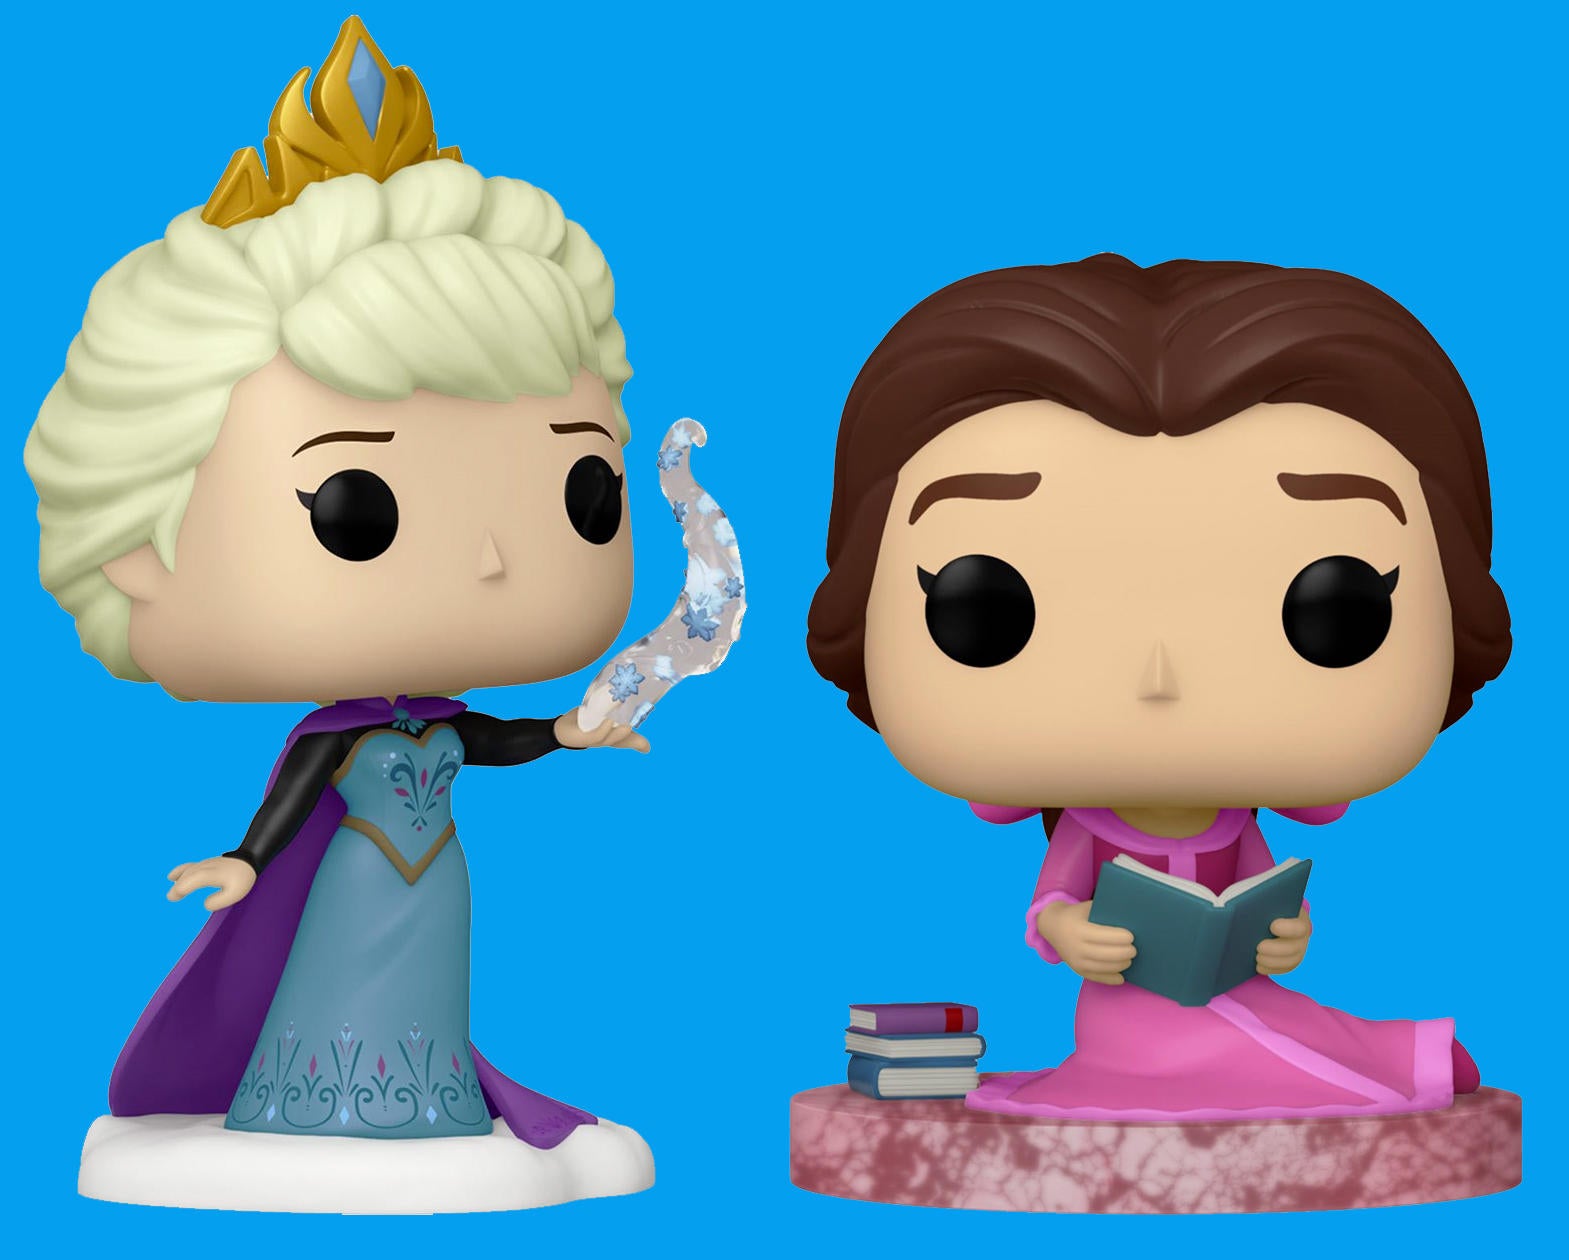 Disney Ultimate Funko Pop Line Adds Elsa and Belle